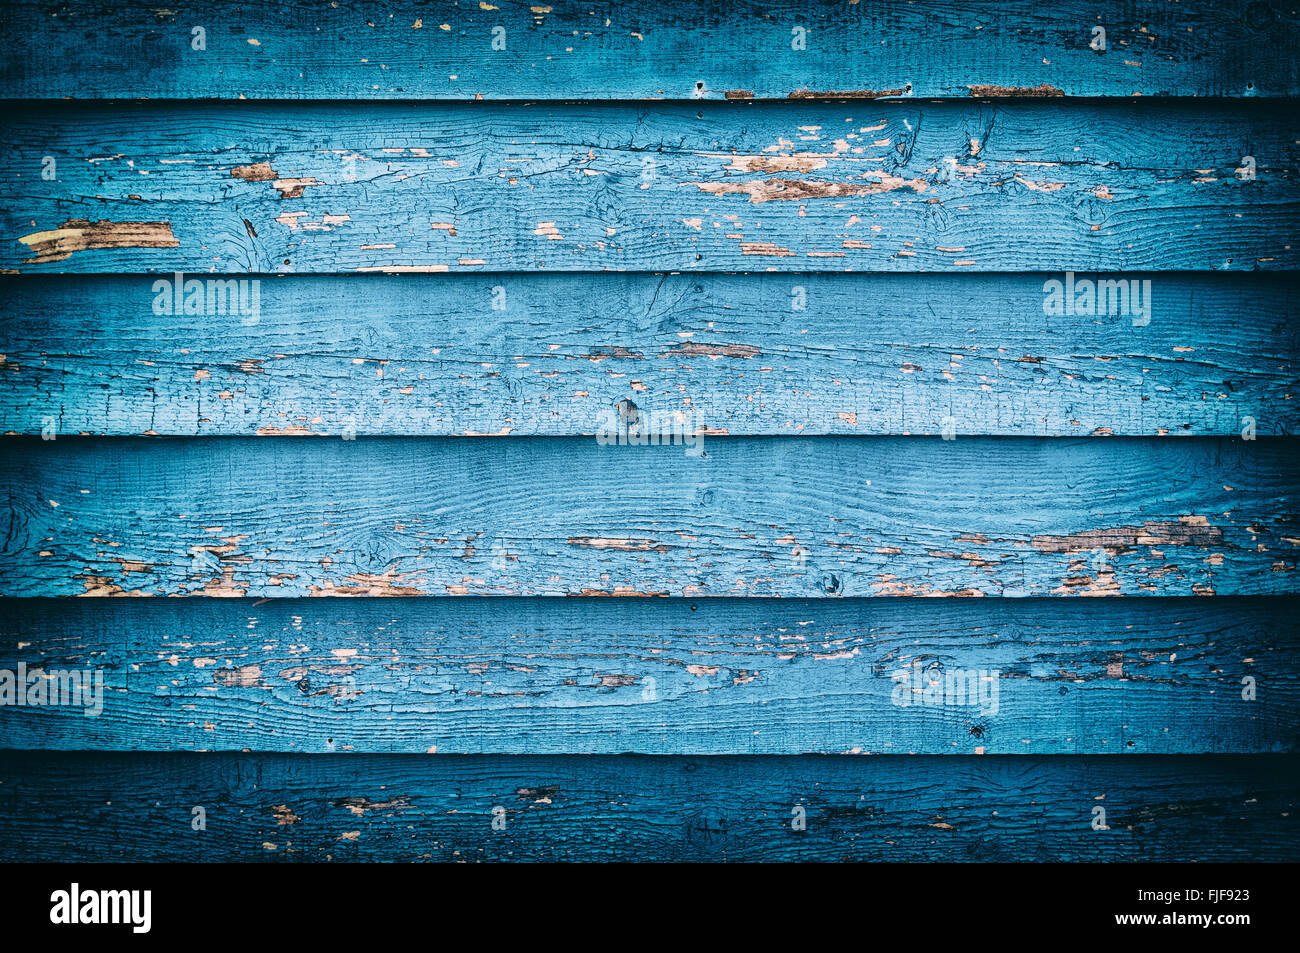 Textura de madera - La vista horizontal de un fondo de madera rústica y desgastada, pintada de azul. Foto de stock